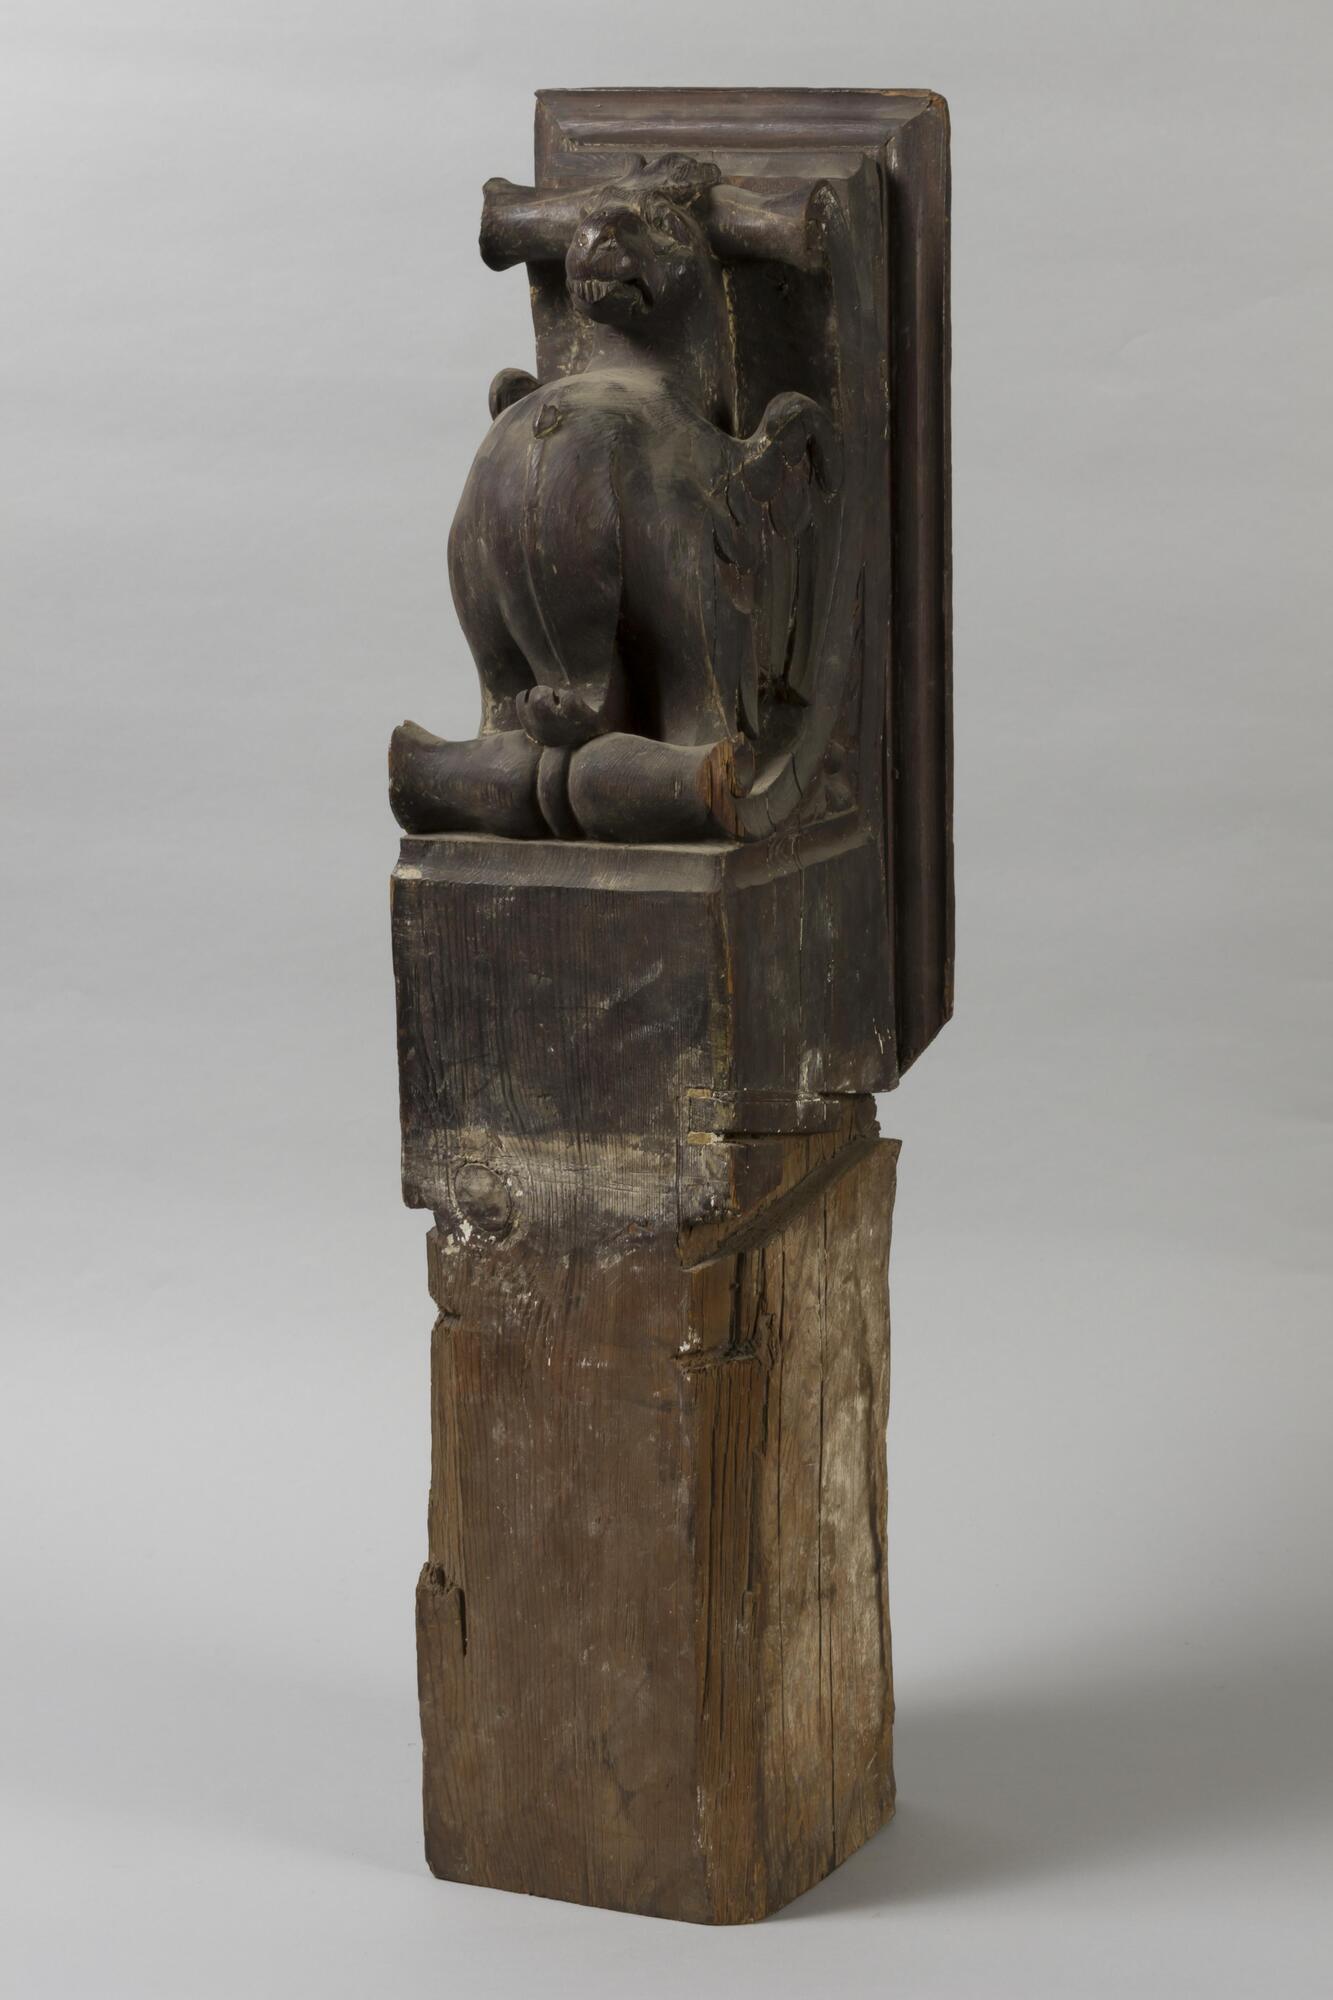 Carved animal figure on pedestal.